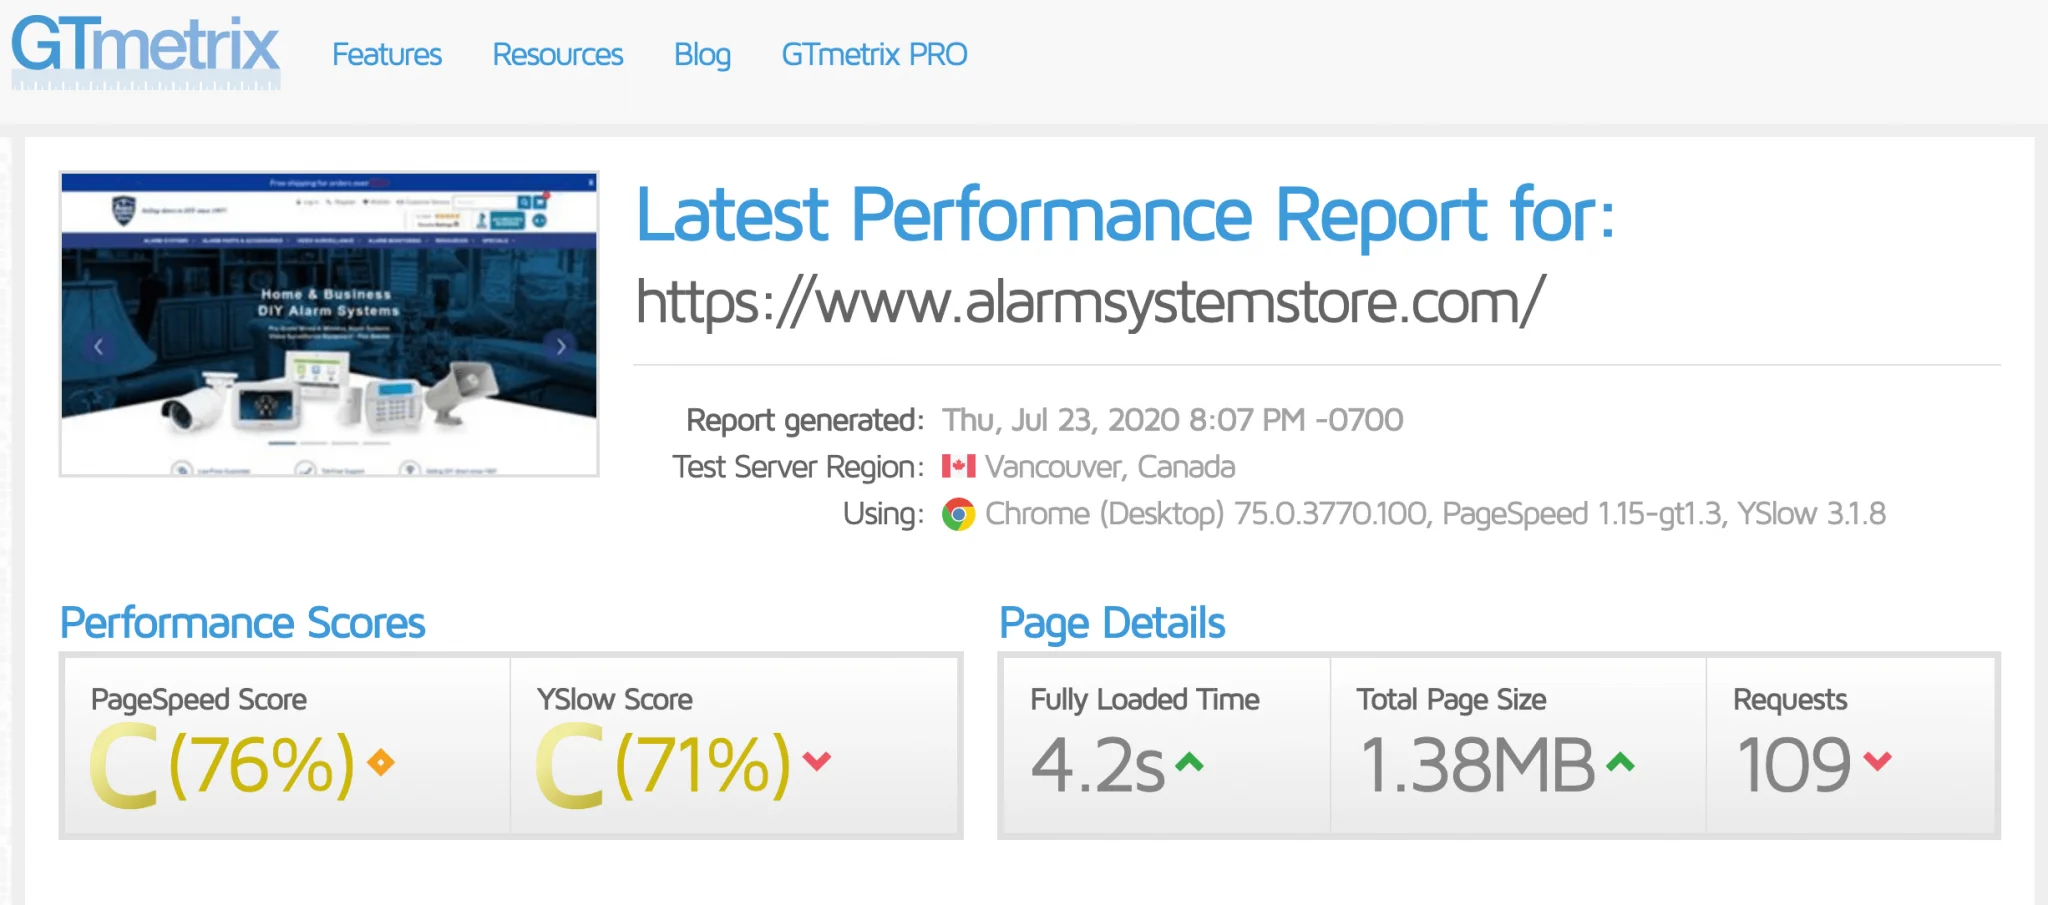 website sample performance report from gtmetrix